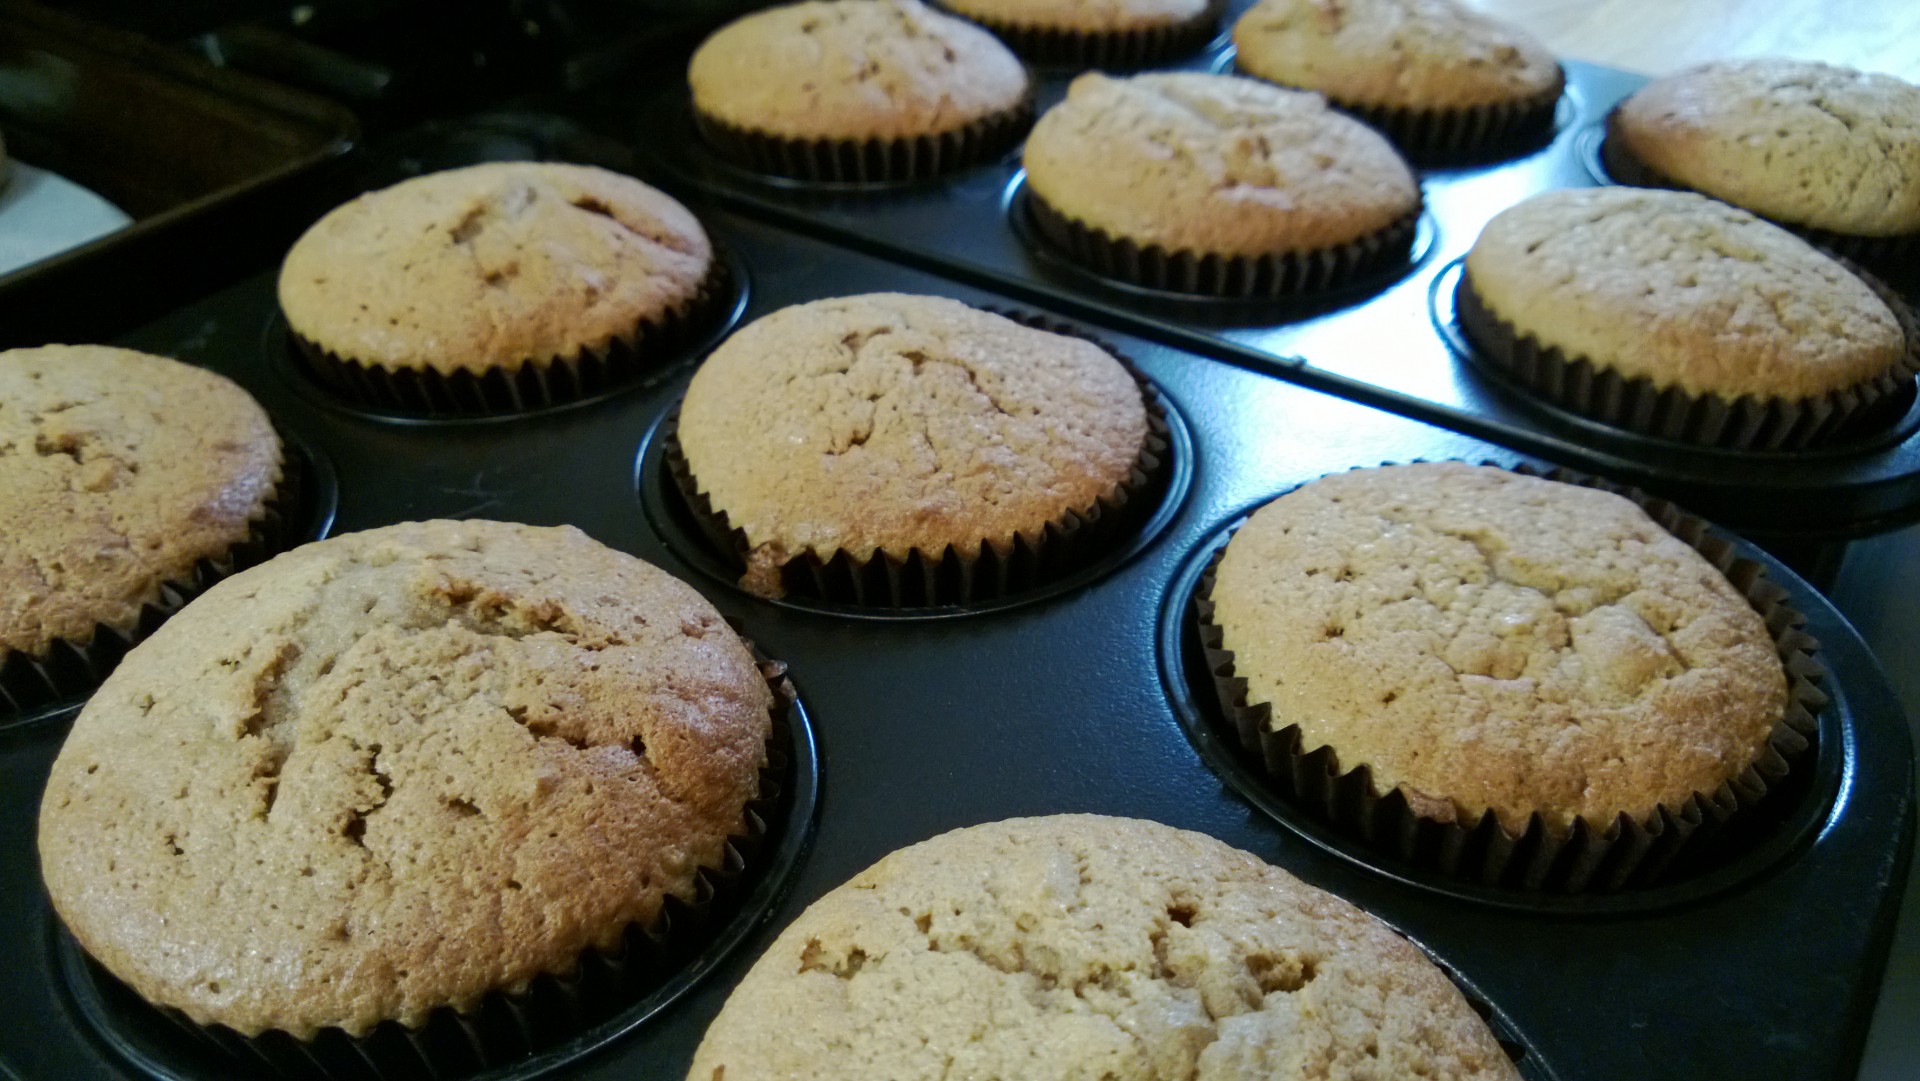 muffins oven fresh free photo